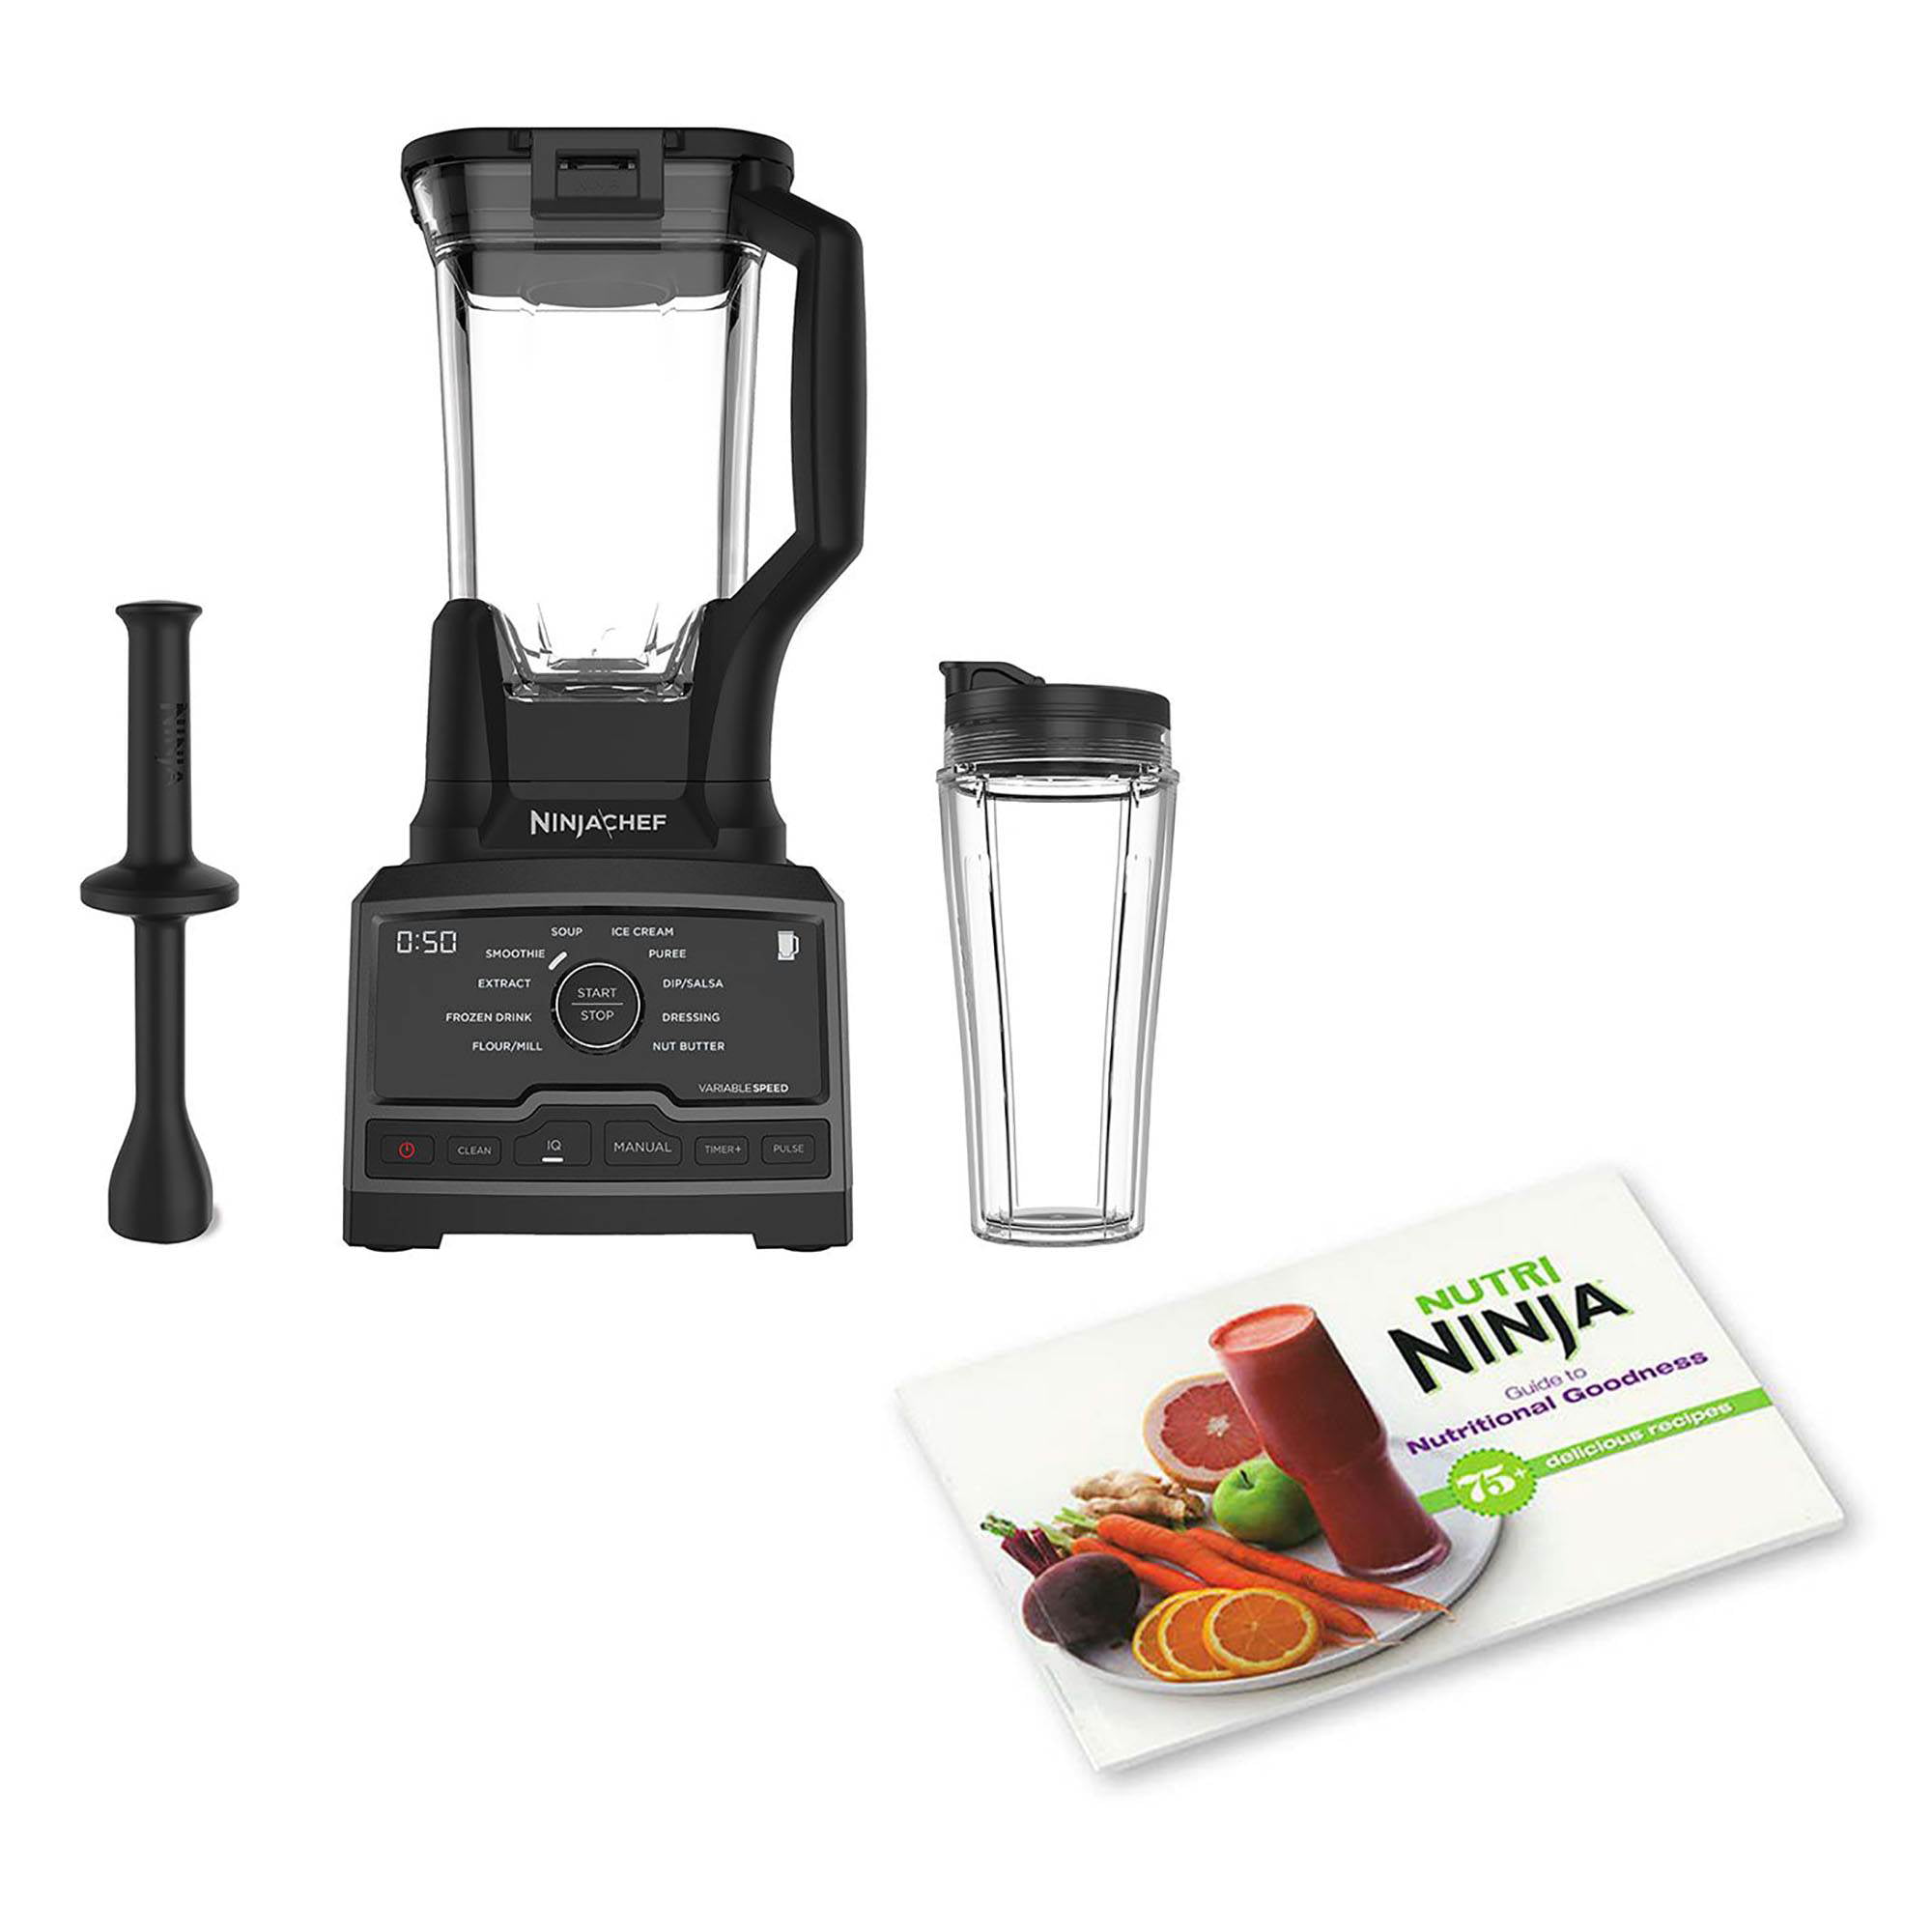 Ninja Chef 1500 Watt Blender Walmart Sale 2020